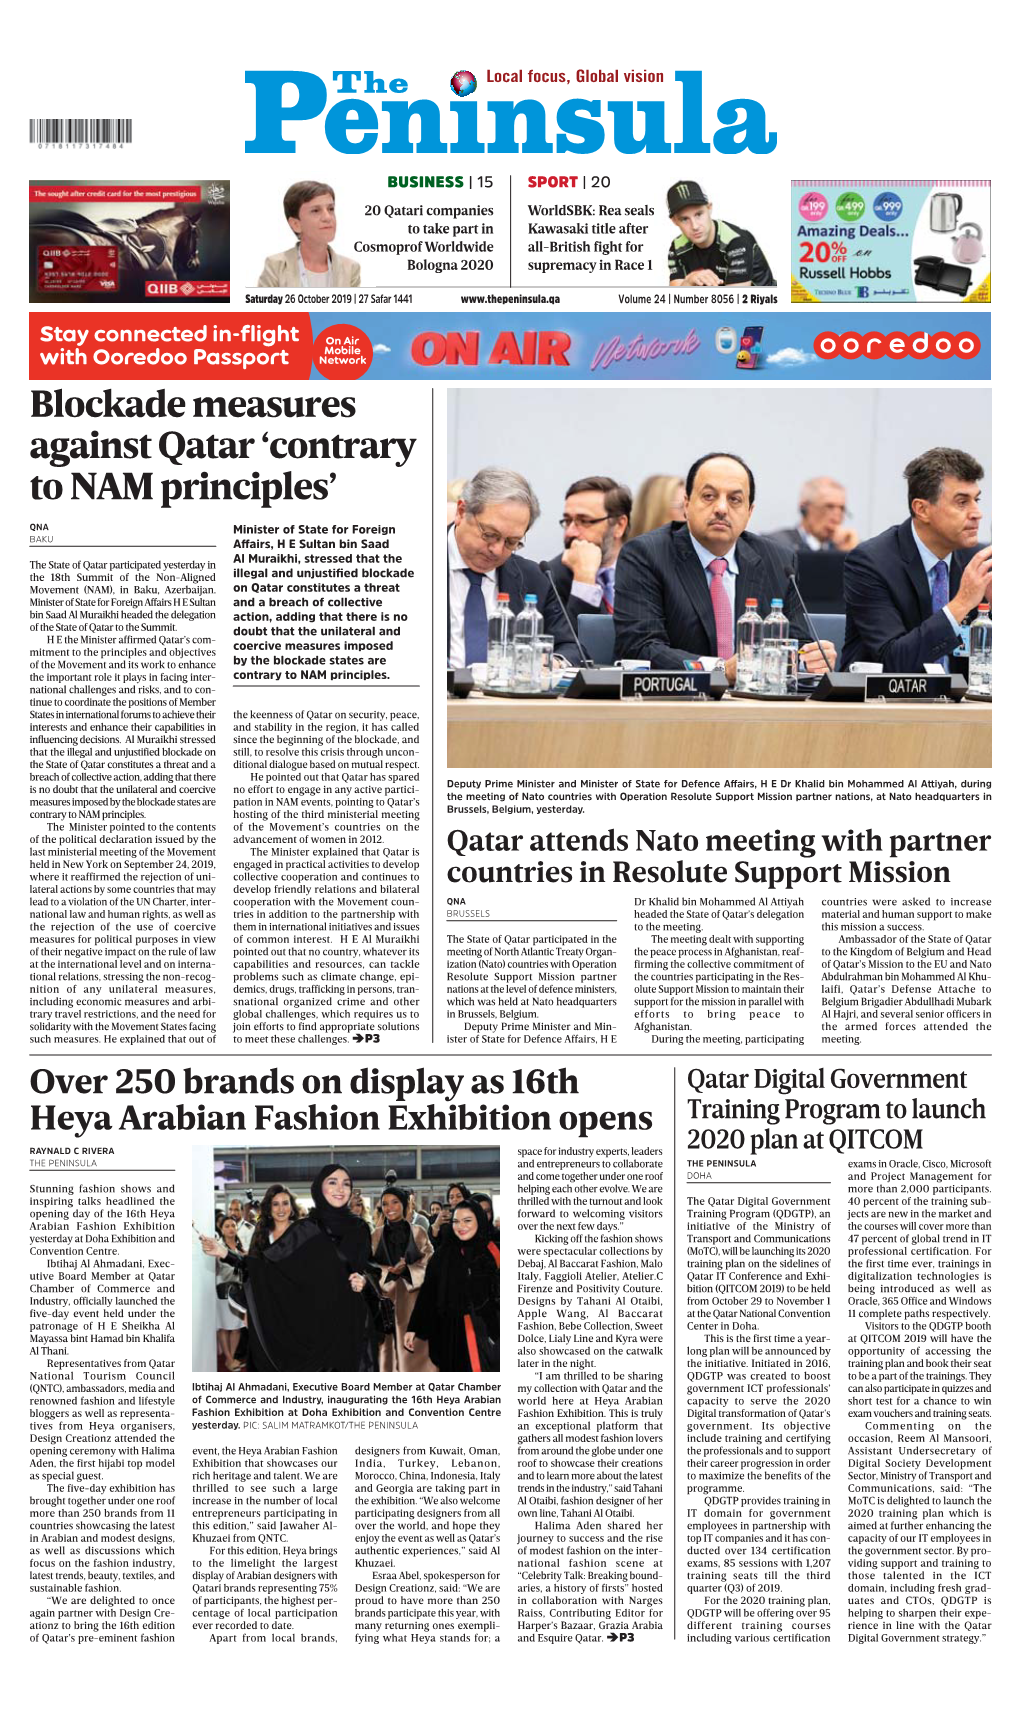 Blockade Measures Against Qatar ‘Contrary to NAM Principles’